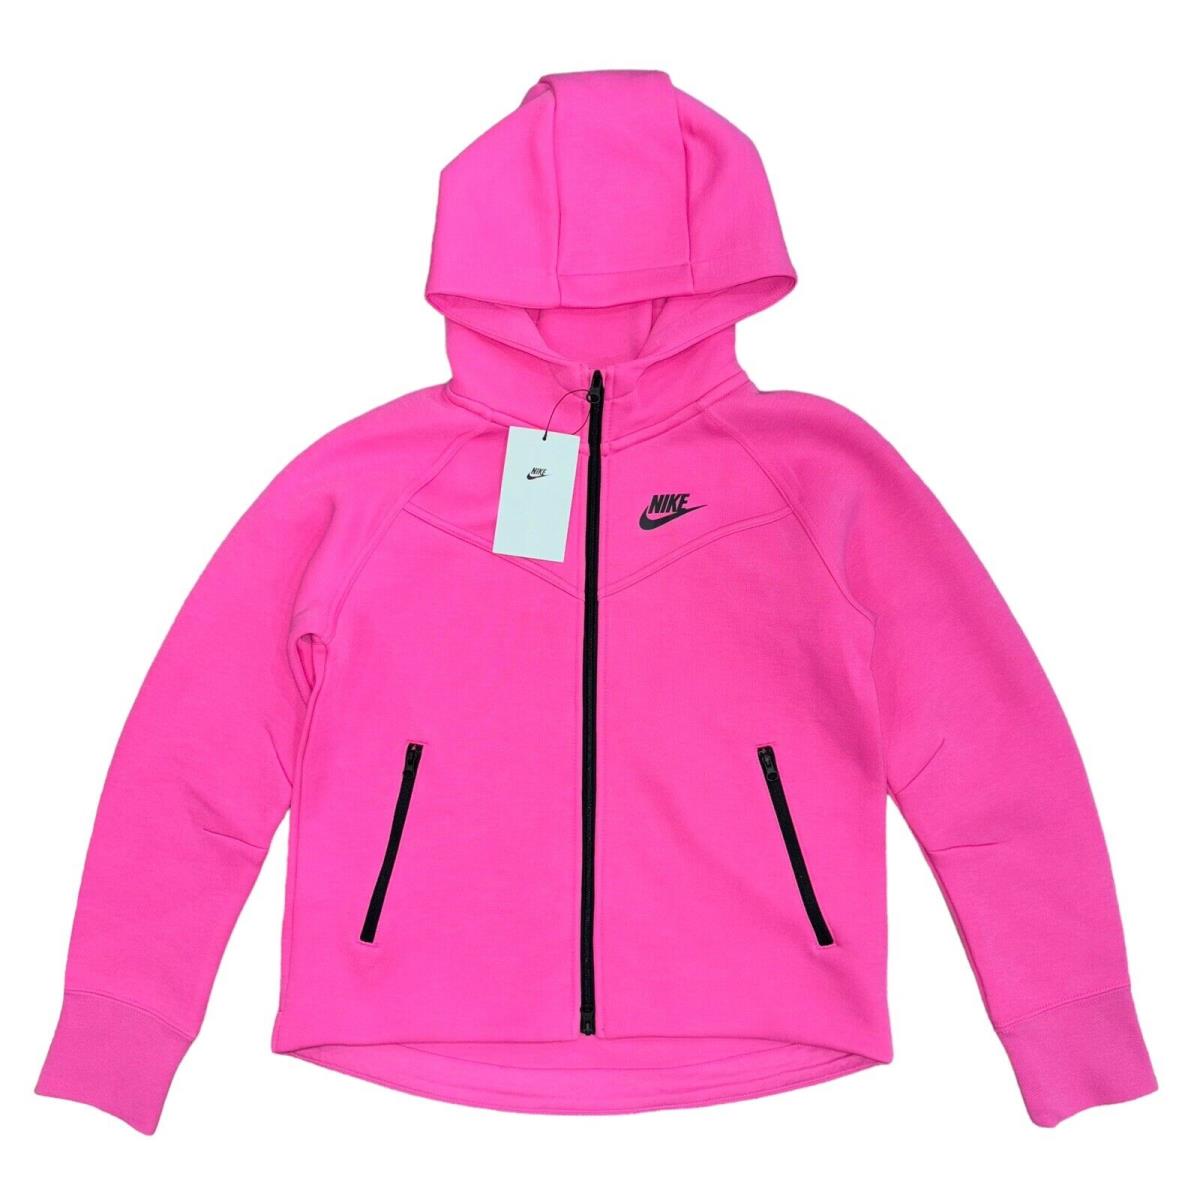 Nike Tech Fleece Full Zip Pink Jacket Sweatshirt Girl`s Size Med FD2979-605